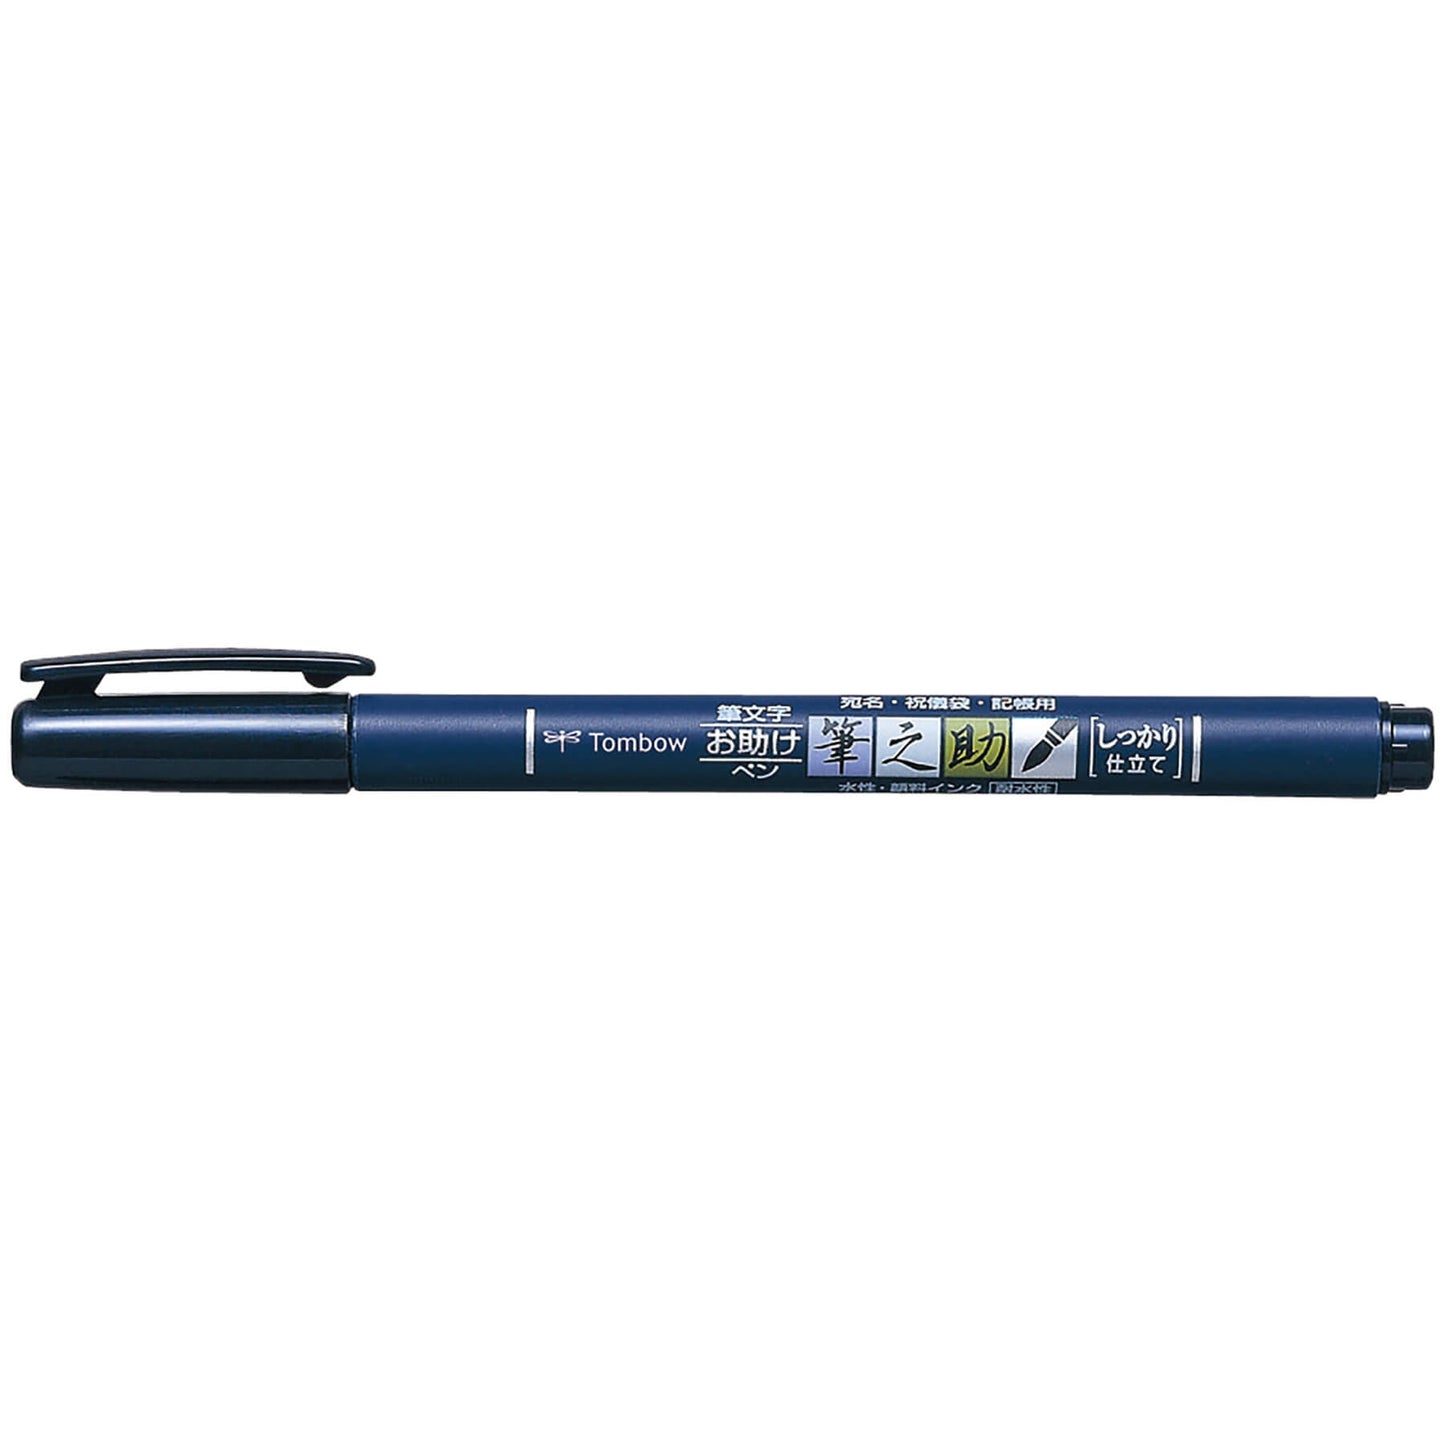 Tombow Fudenosuke Hard Brush Pen - Black